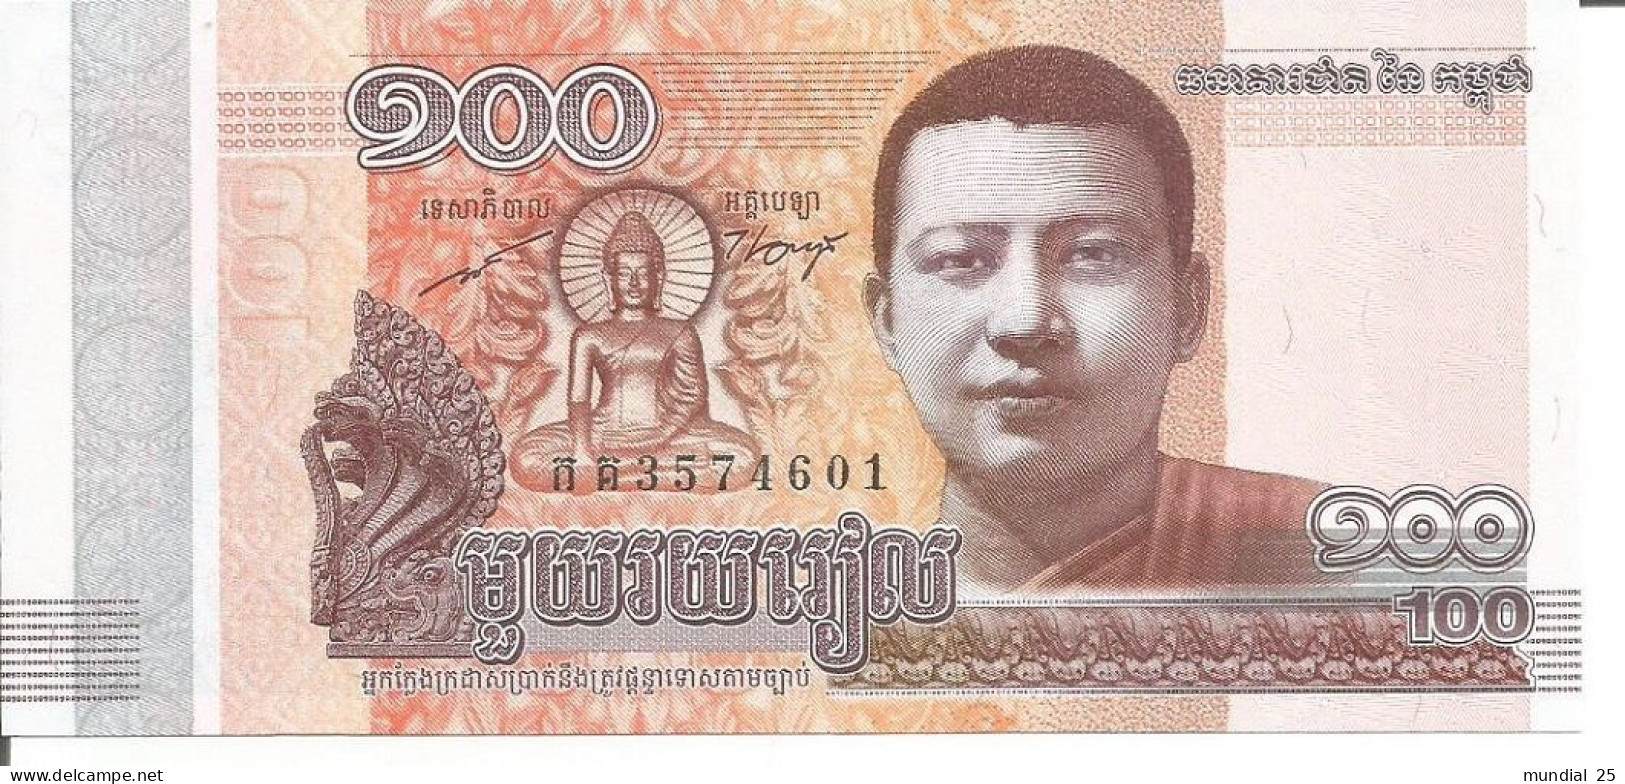 3 CAMBODIA NOTES 100 RIELS 2014 - Cambodia